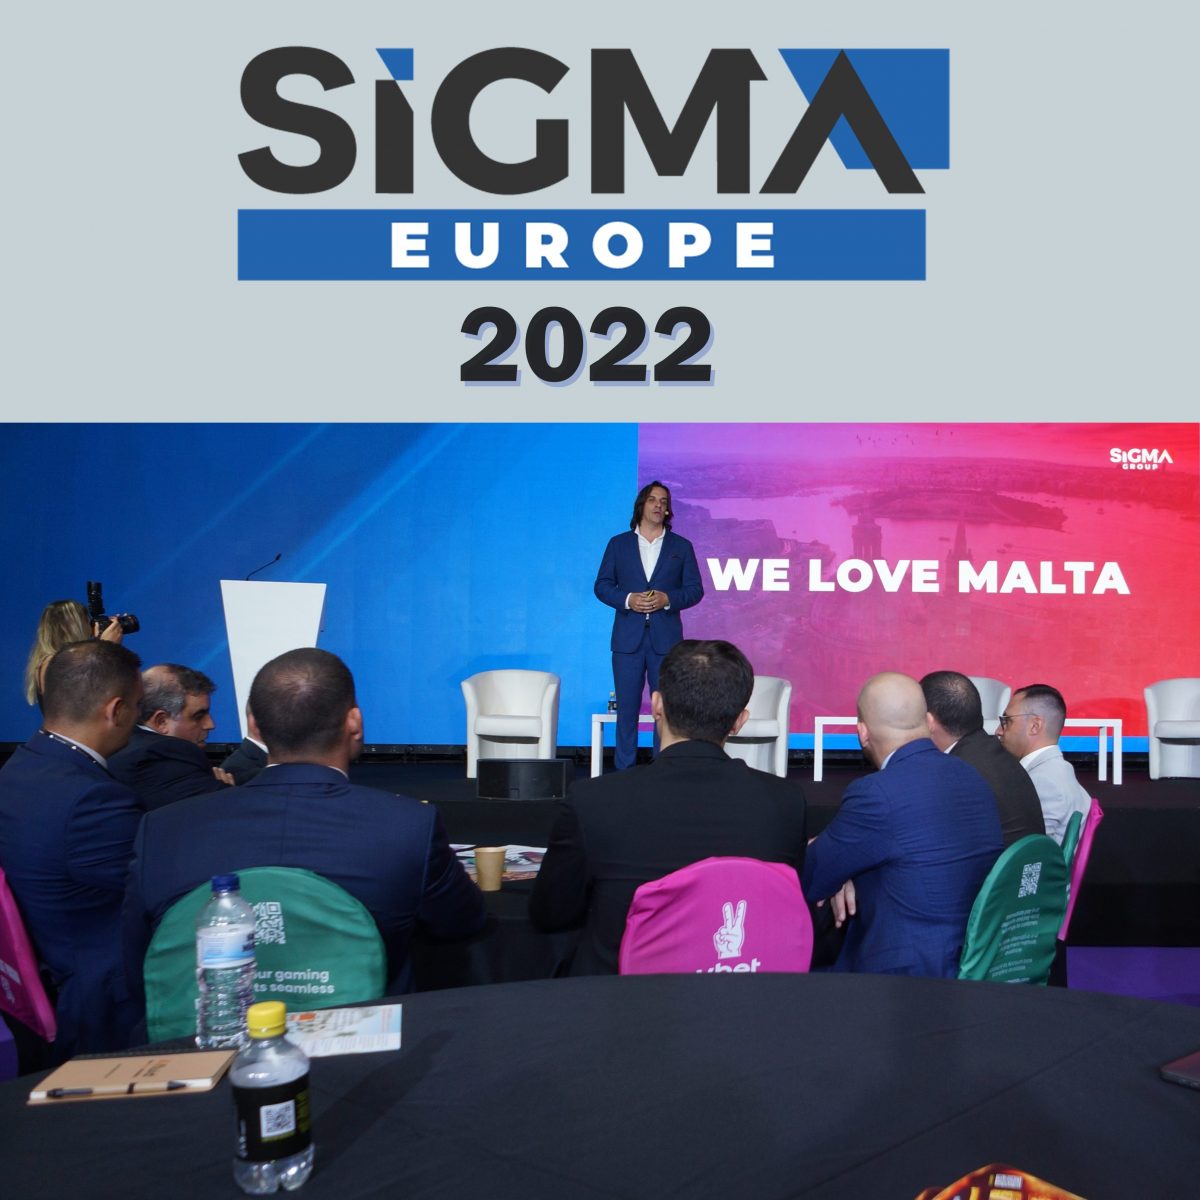 SiGMA Europe 2022 in Malta